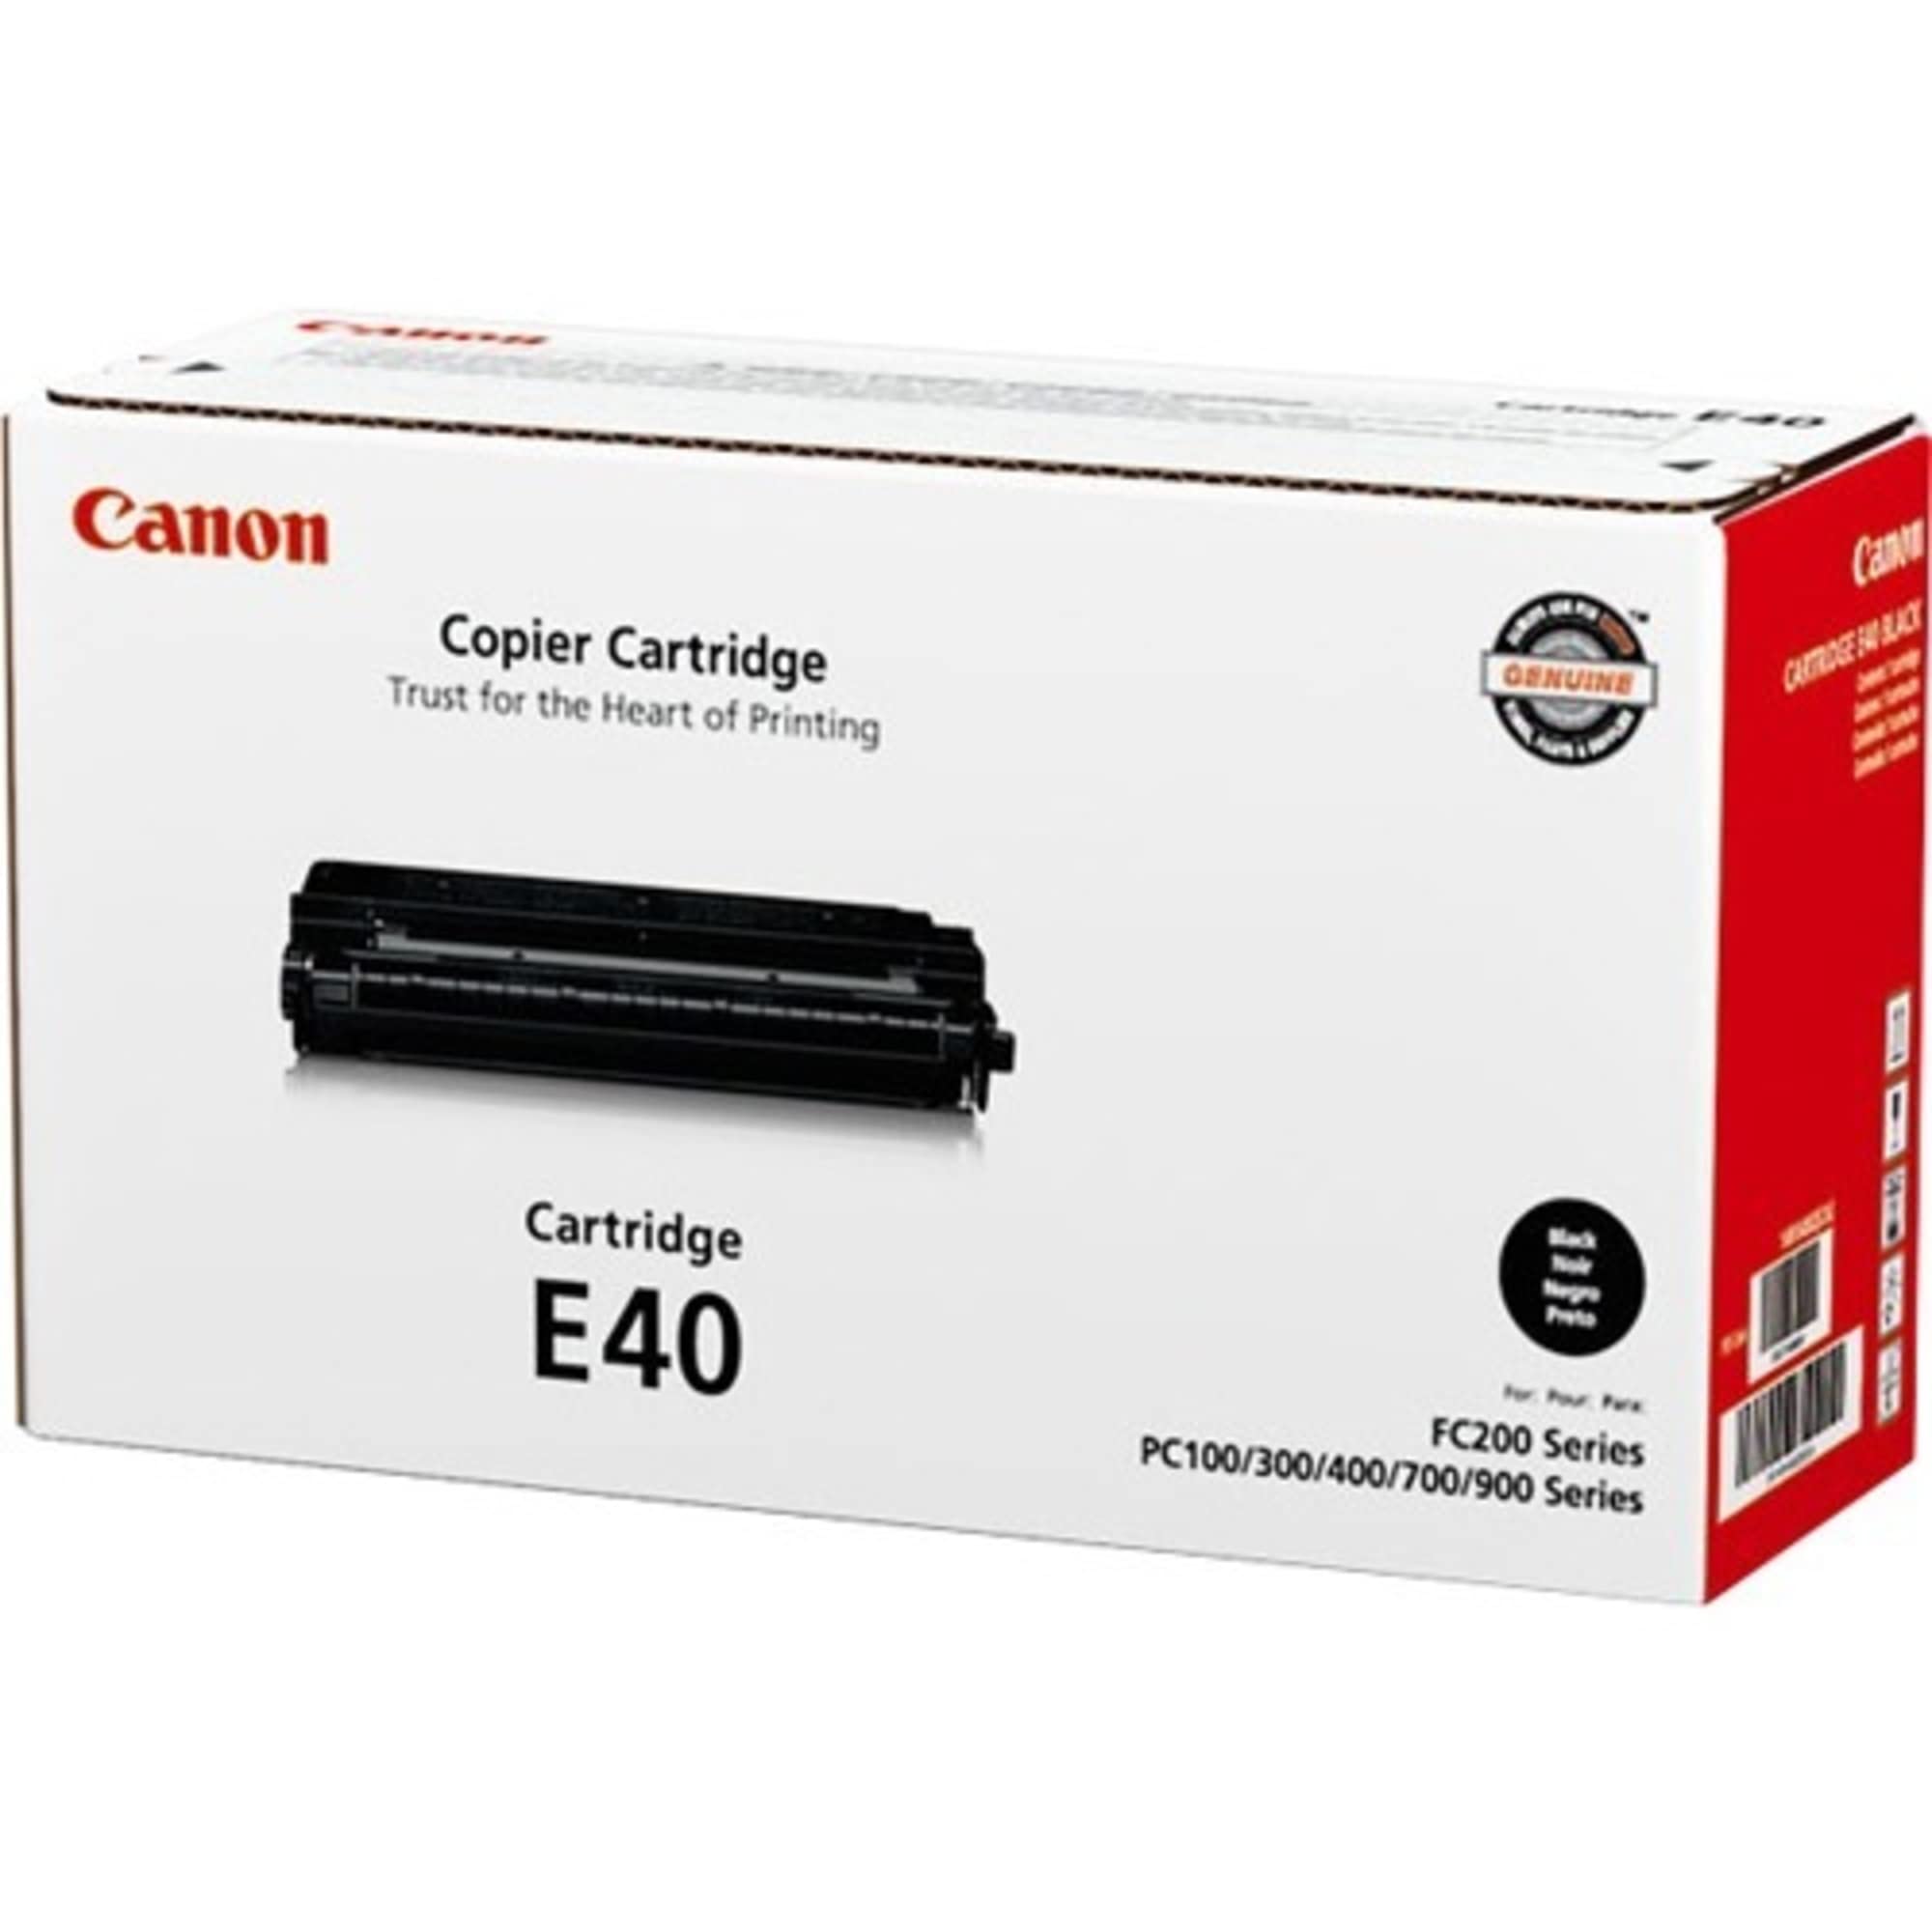 Canon E40 Black Toner Cartridge (1491A002CA)